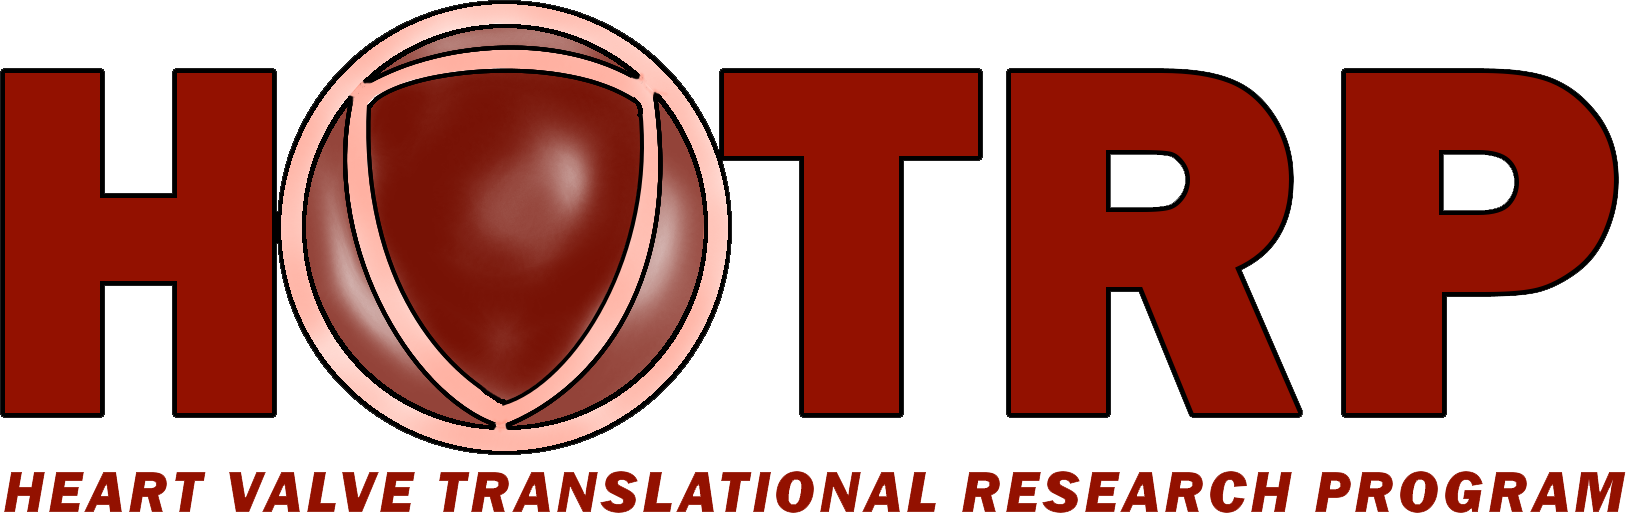 Heart Valve Translational Research Program